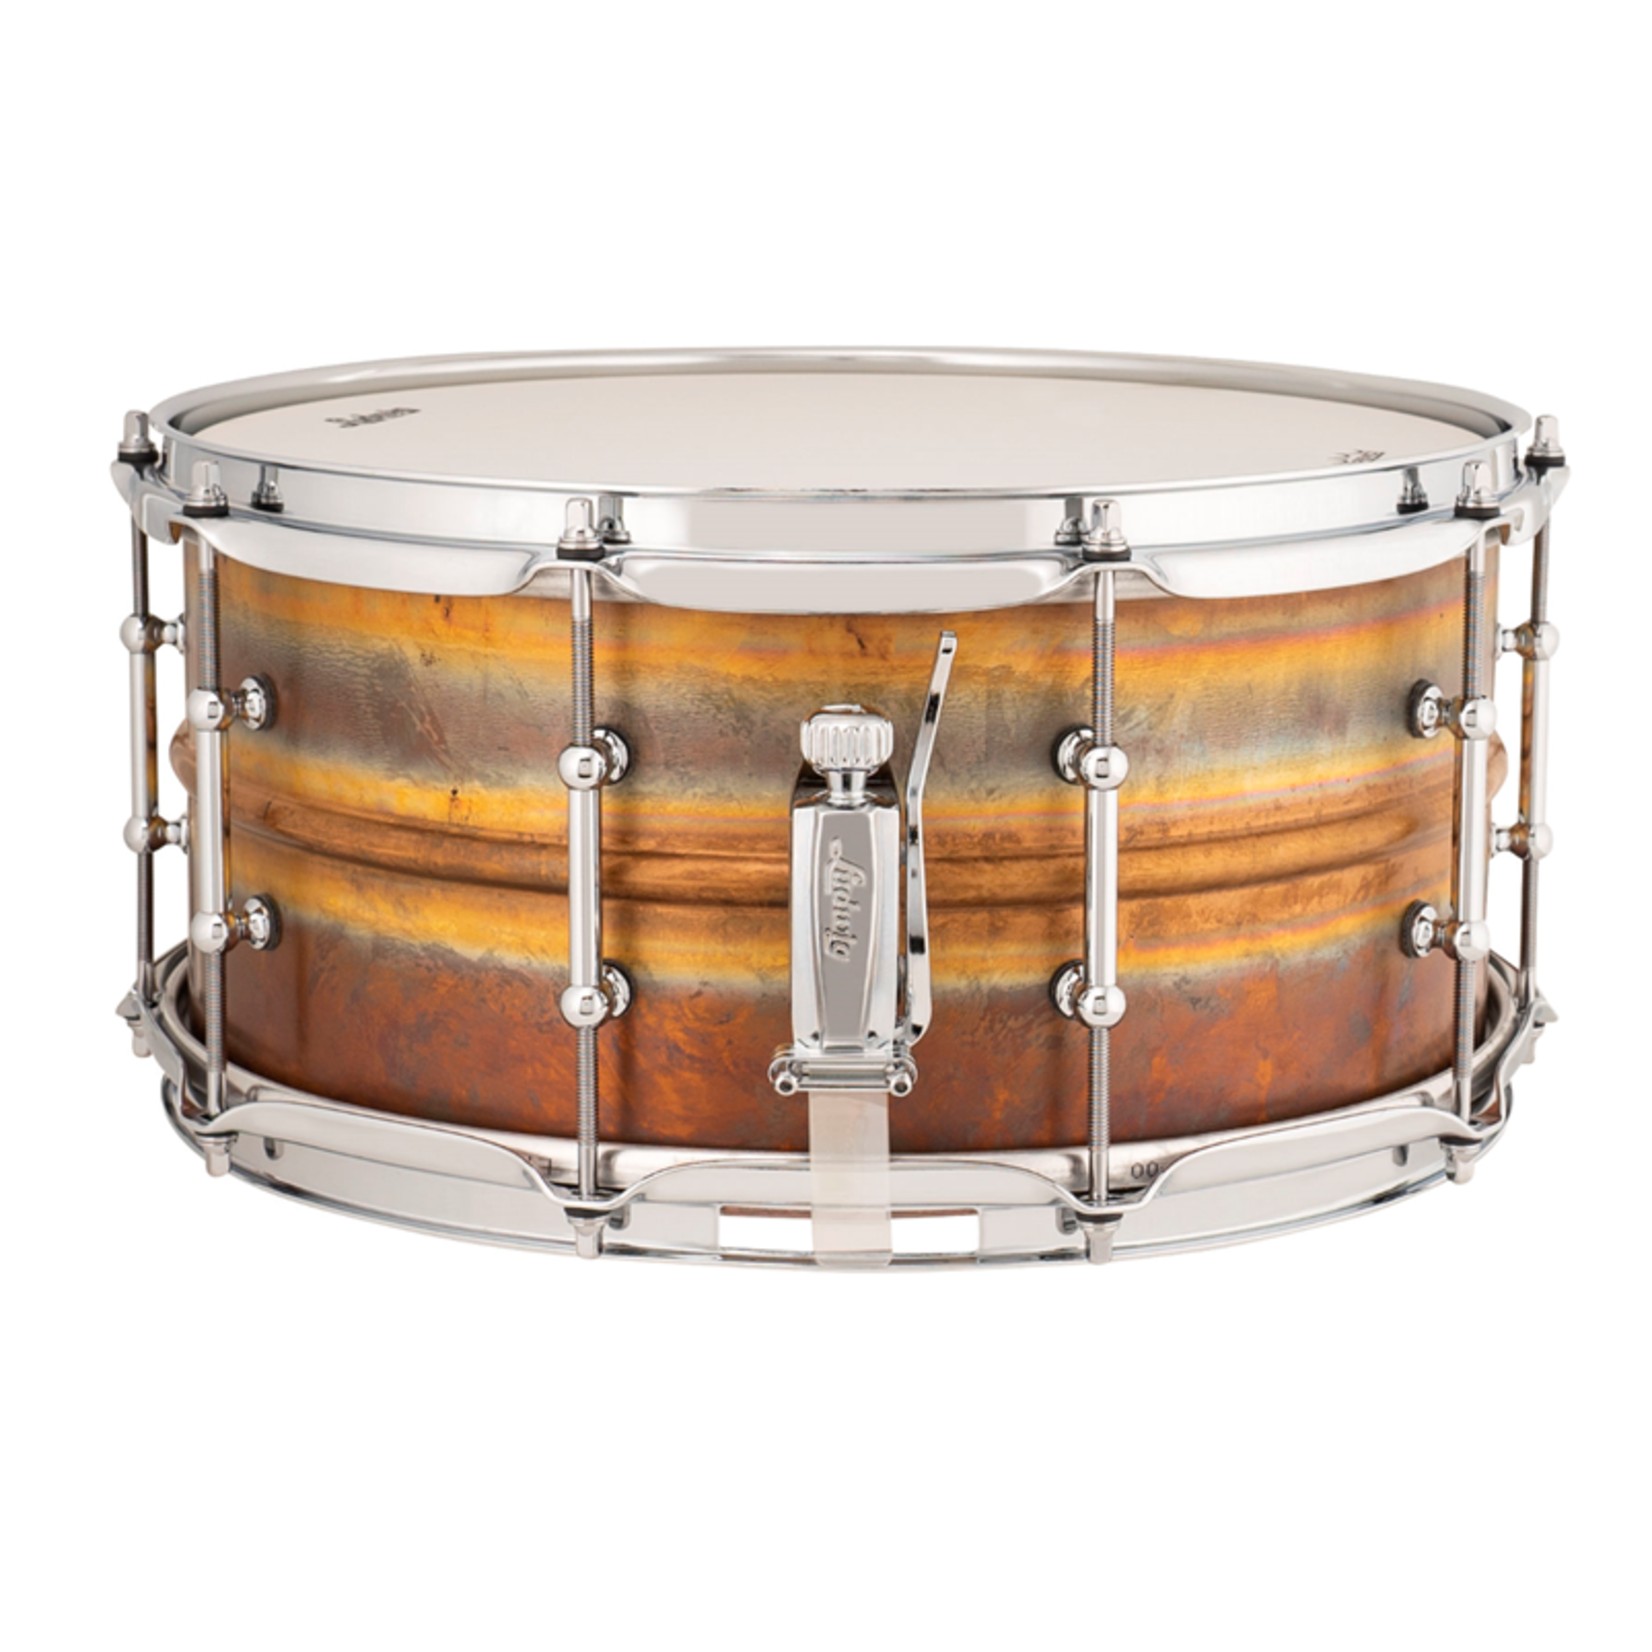 Ludwig Ludwig 6.5x14" Raw Bronze Phonic Snare Drum w/ Tube Lugs LB552RT